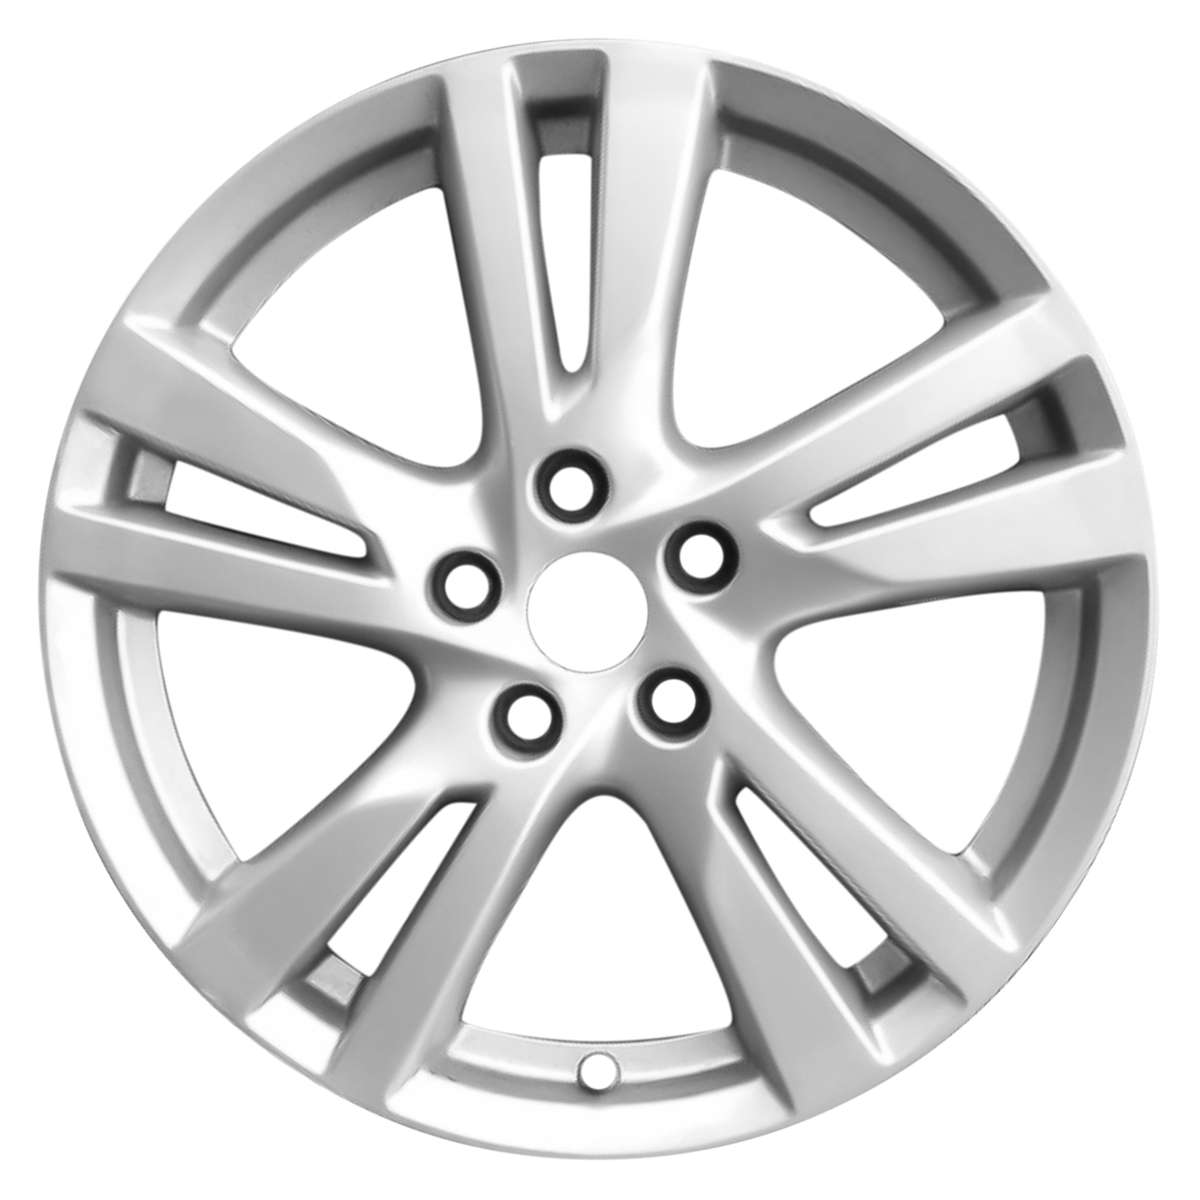 2015 Nissan Altima 18" OEM Wheel Rim W62770S